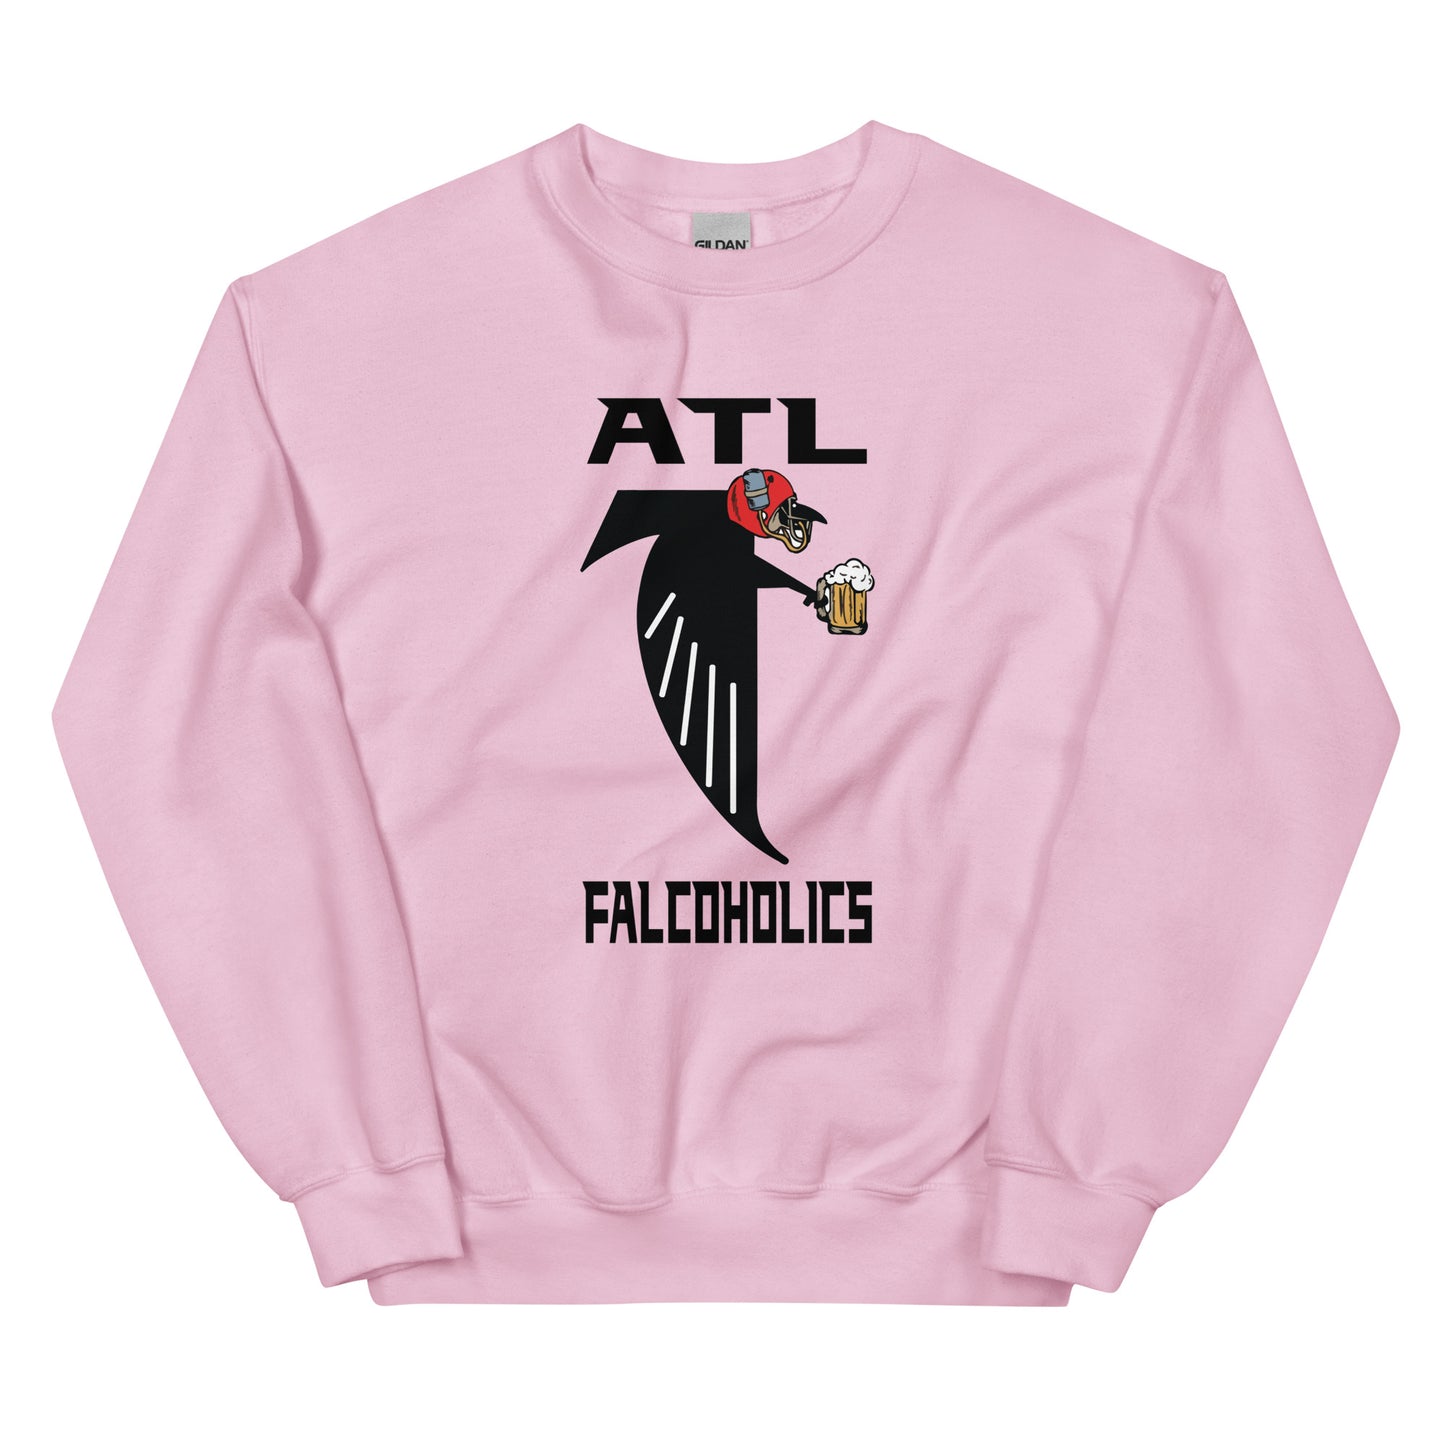 ATL Falcoholics Sweatshirt